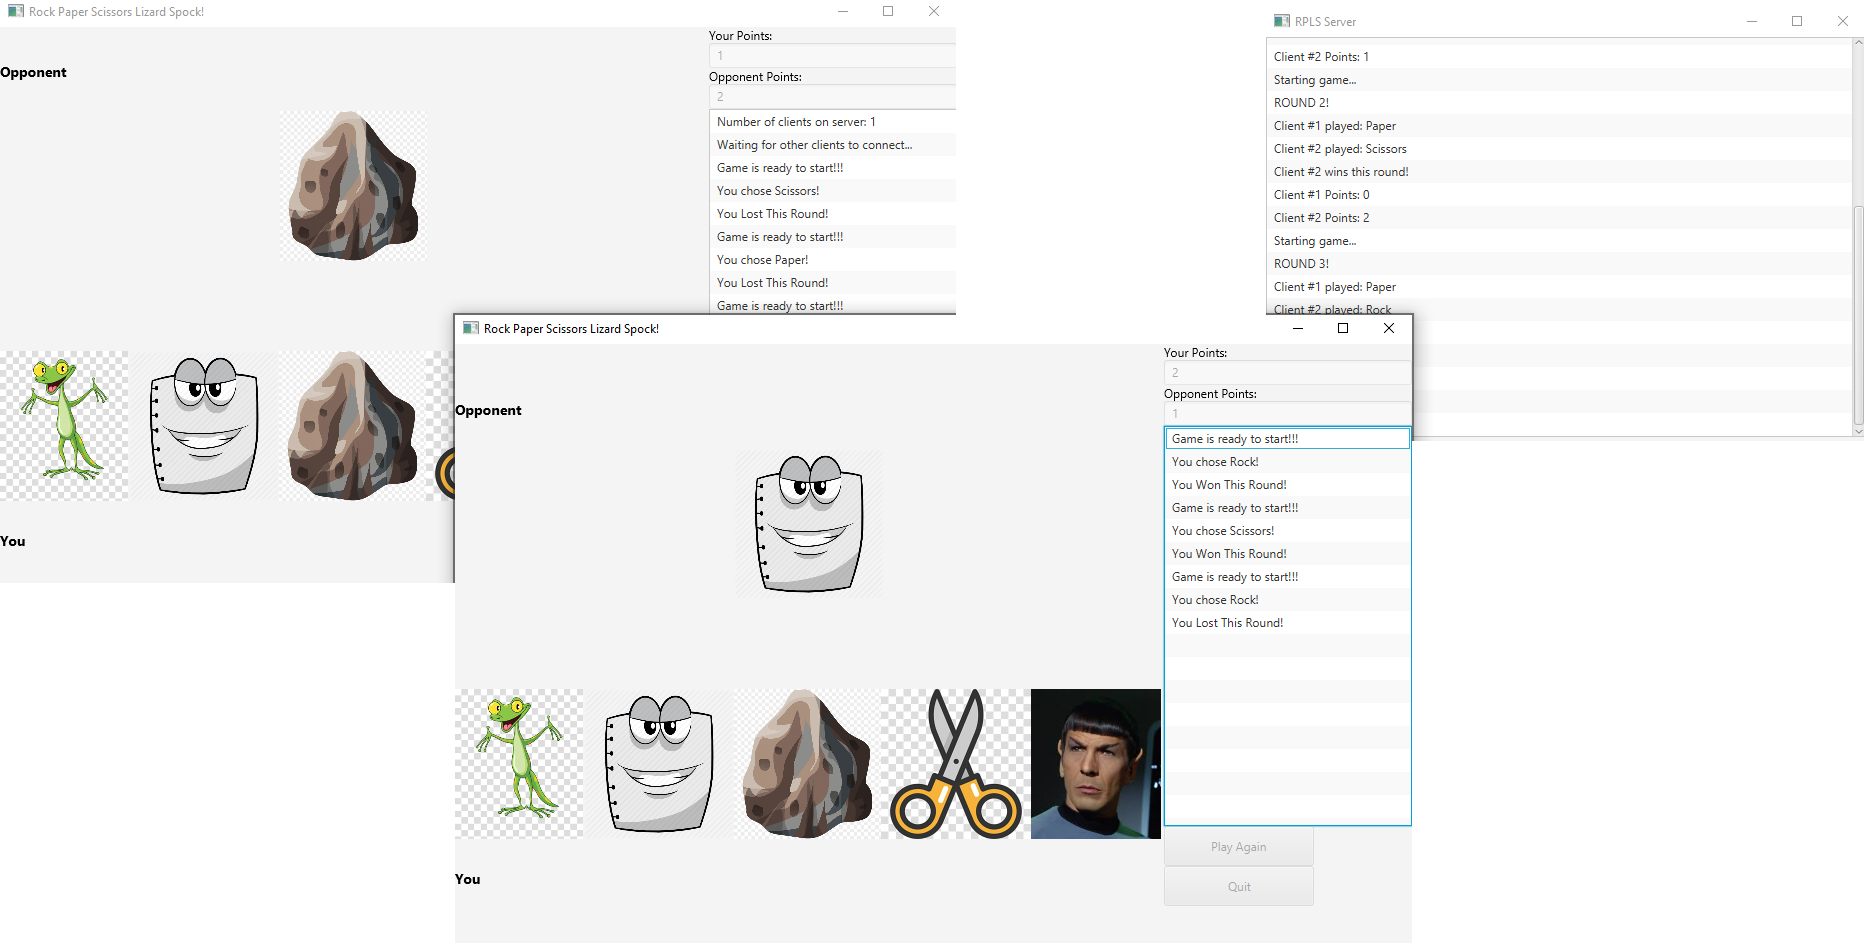 A screenshot of the rock-paper-scissors-lizard-spock game